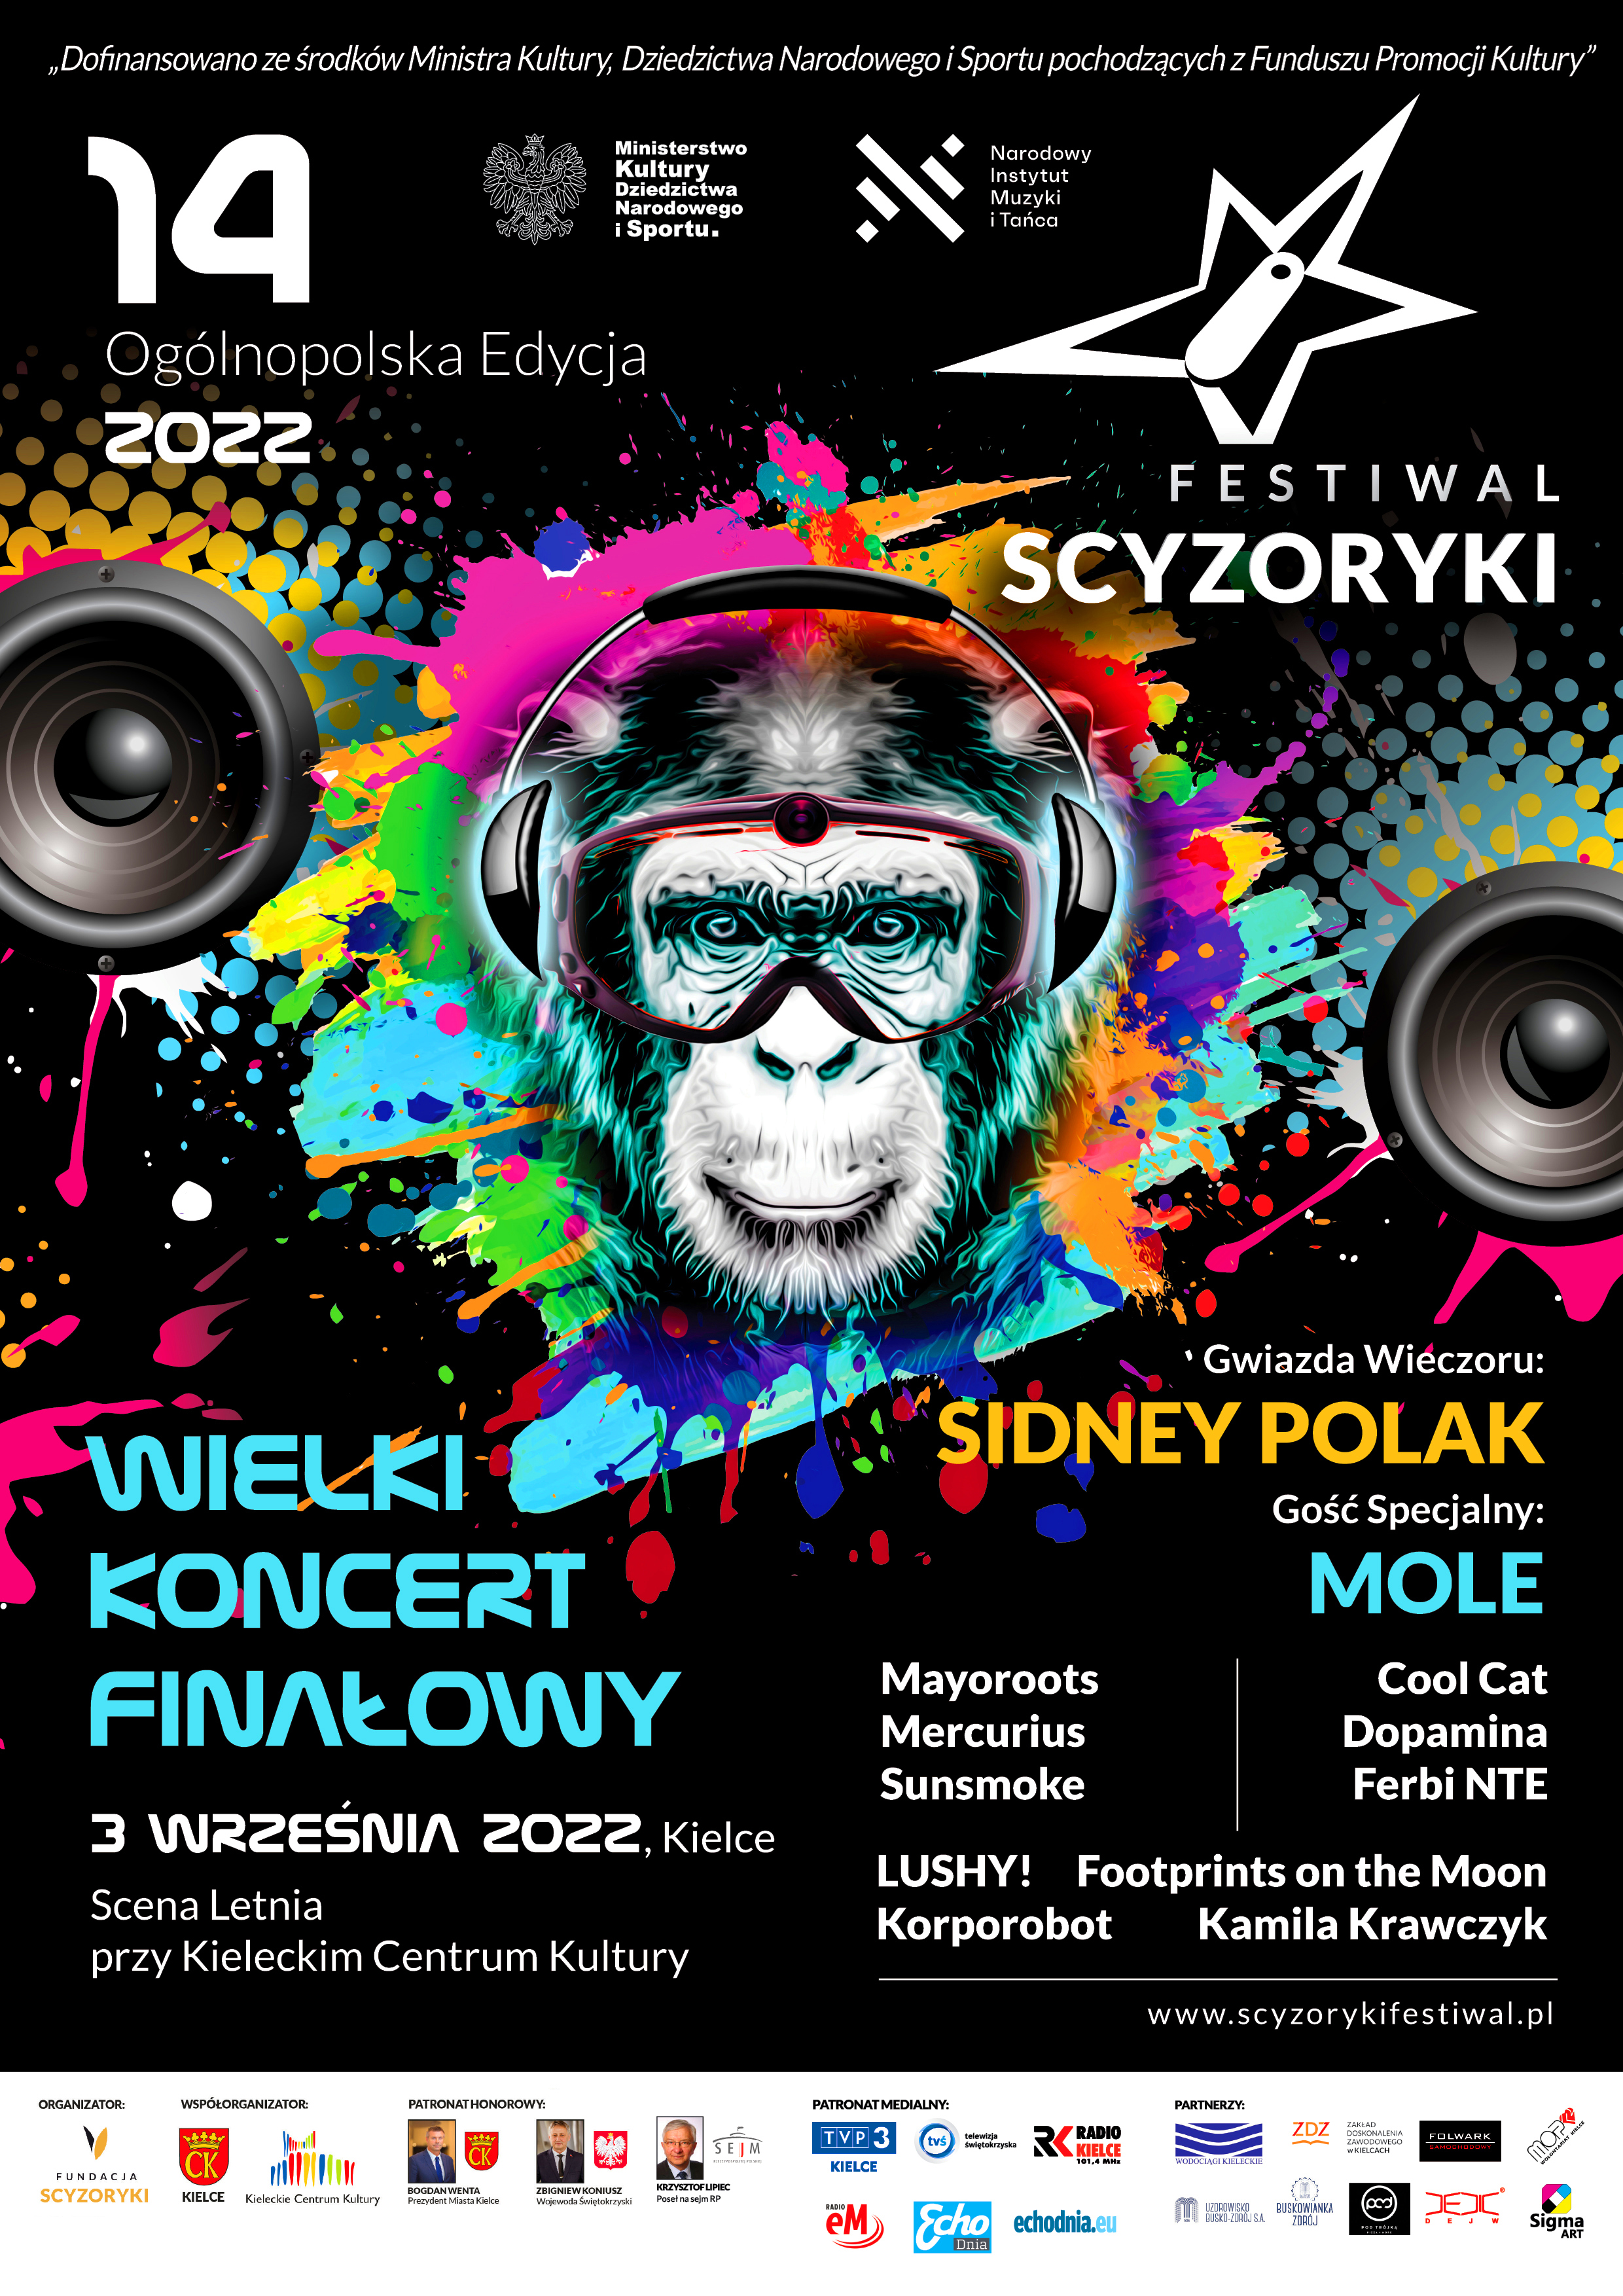 Scyzoryki Festiwal 2022 - plakat.jpg